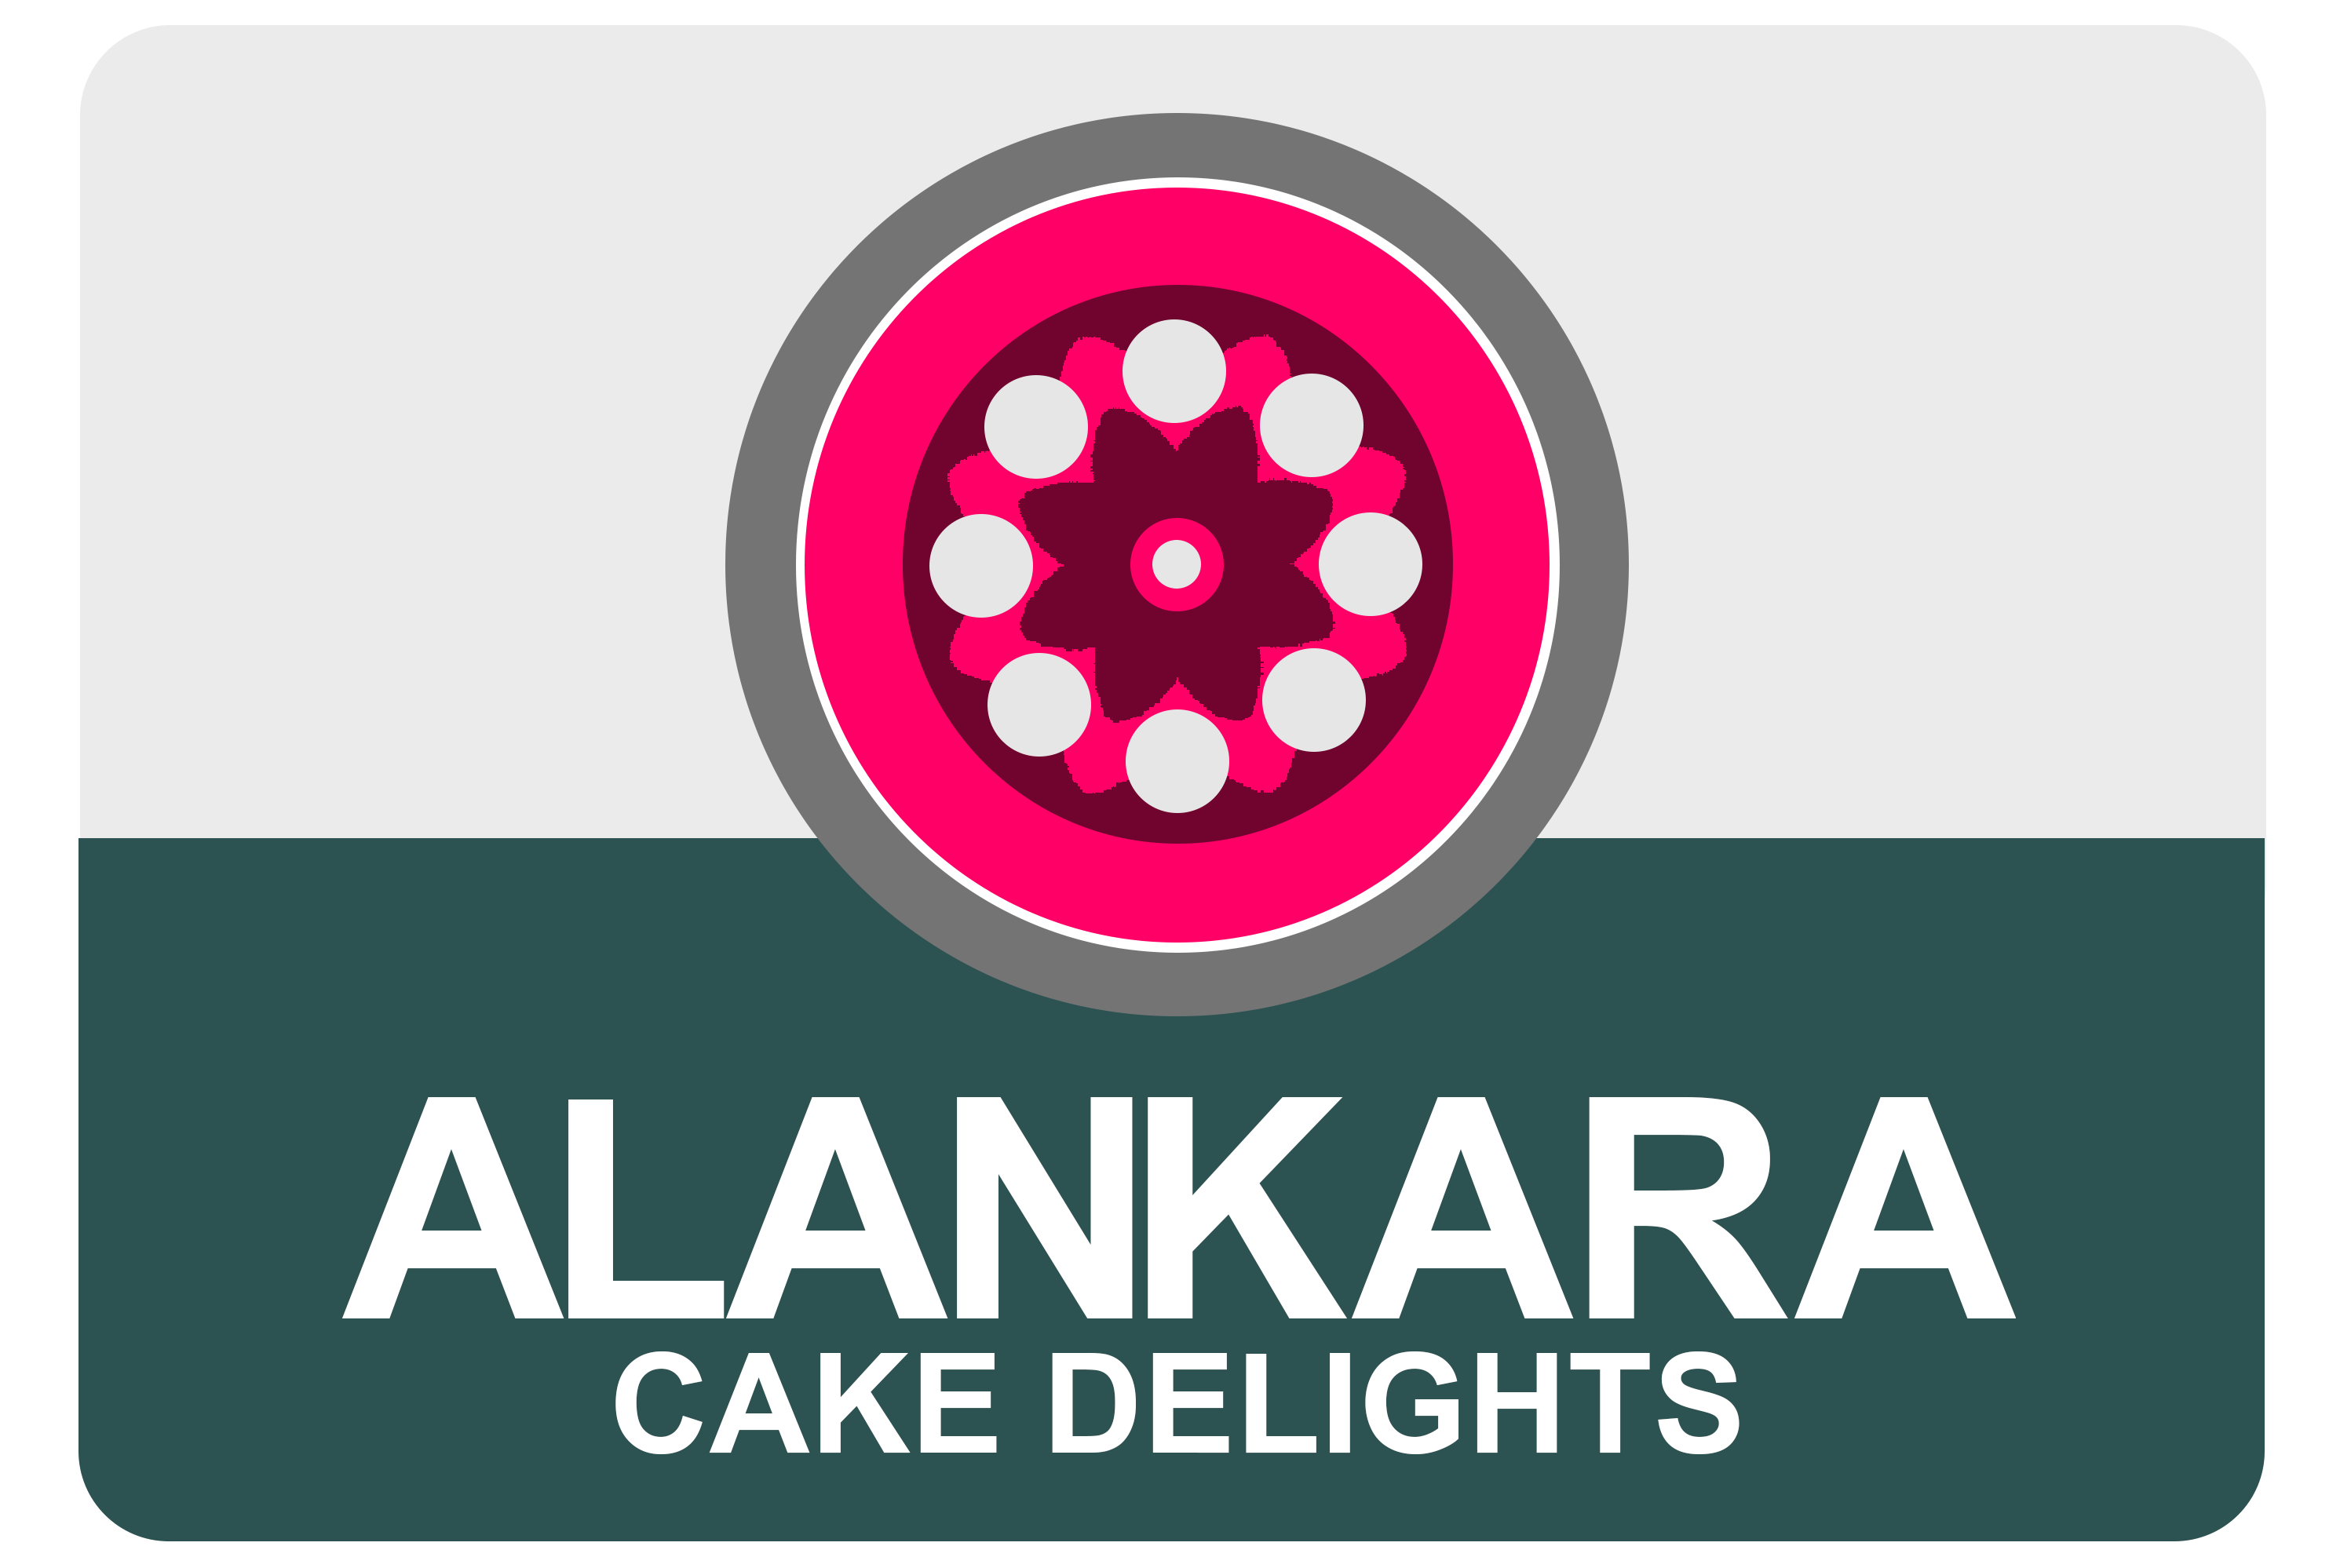 Alankara Cake Delights